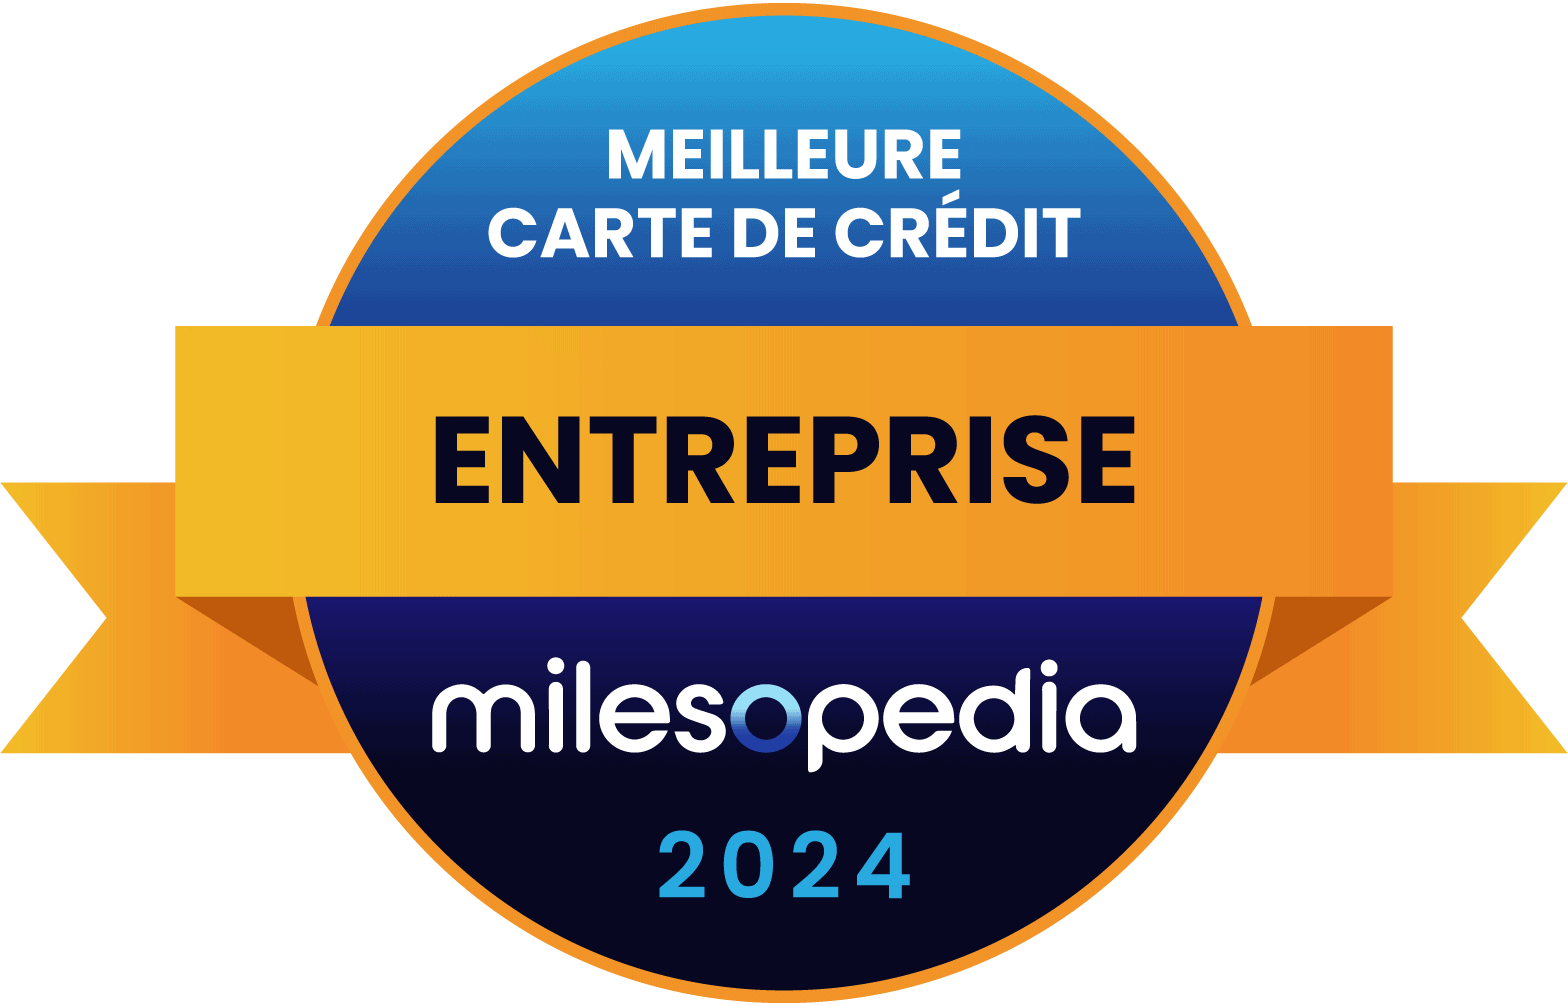 Entreprise MeilleureCarteDeCredit Milesopedia 2024